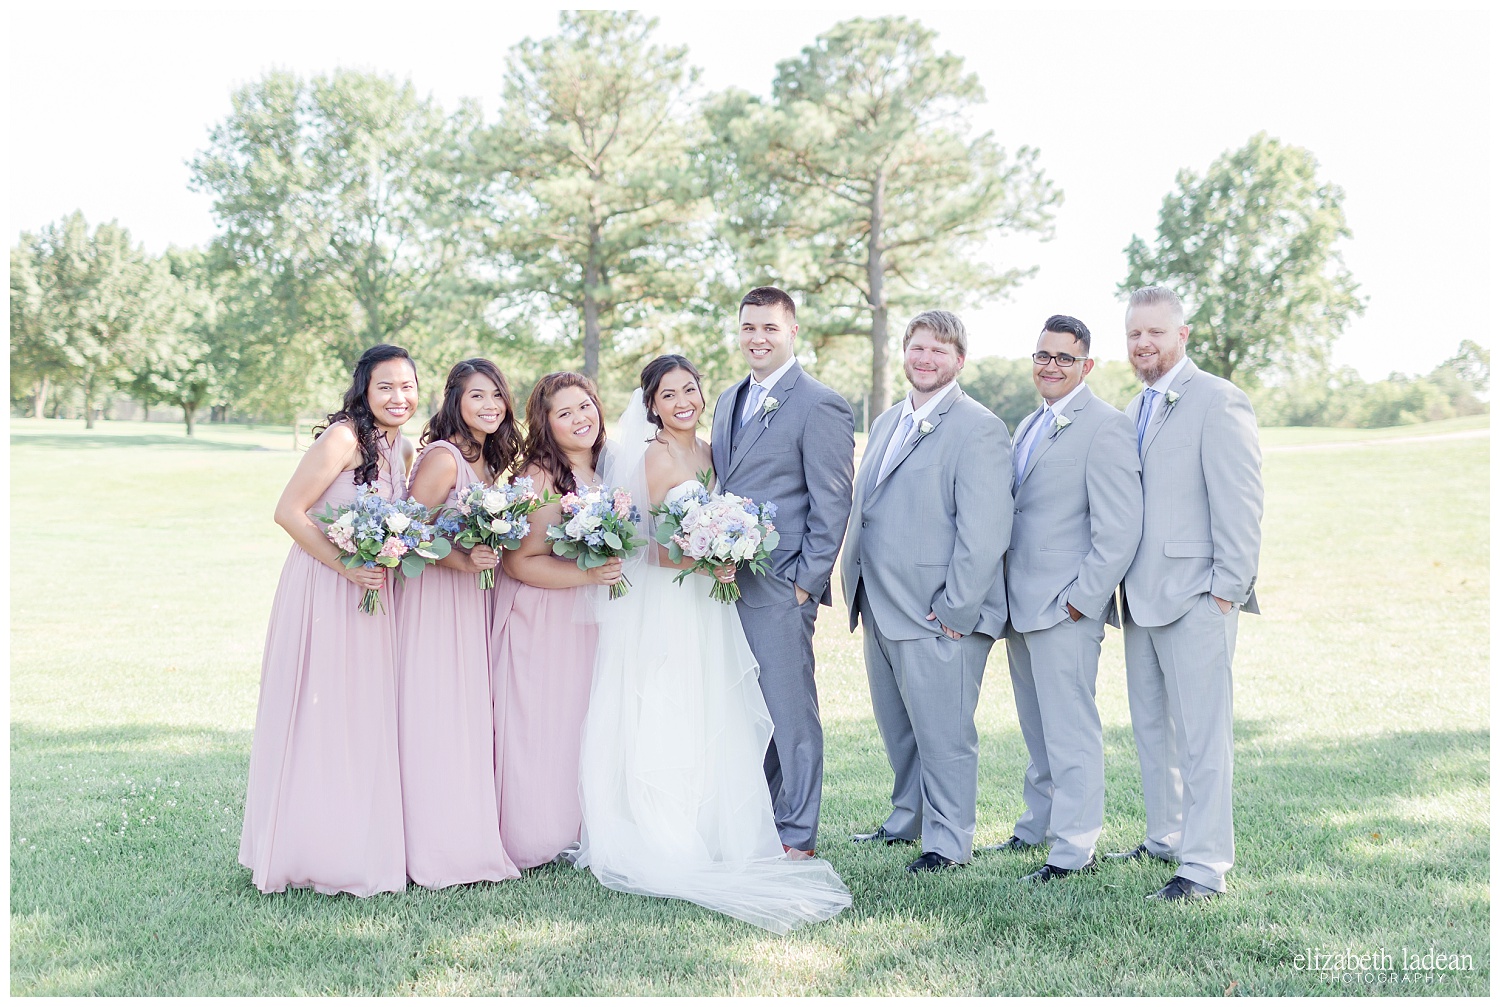 Kansas-City-KC-Wedding-Photographer-2017BestOf-Elizabeth-Ladean-Photography-photo-_5982.jpg